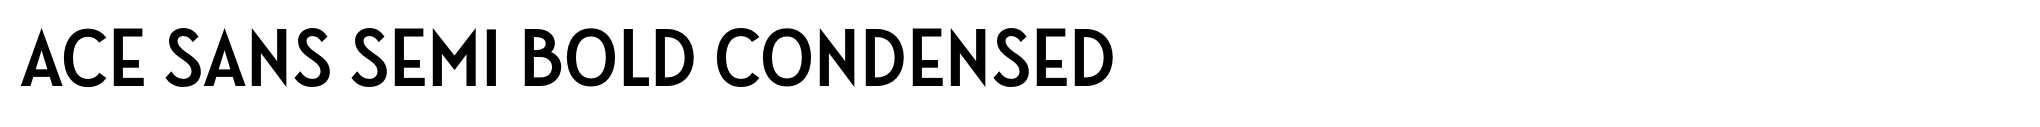 Ace Sans Semi Bold Condensed image